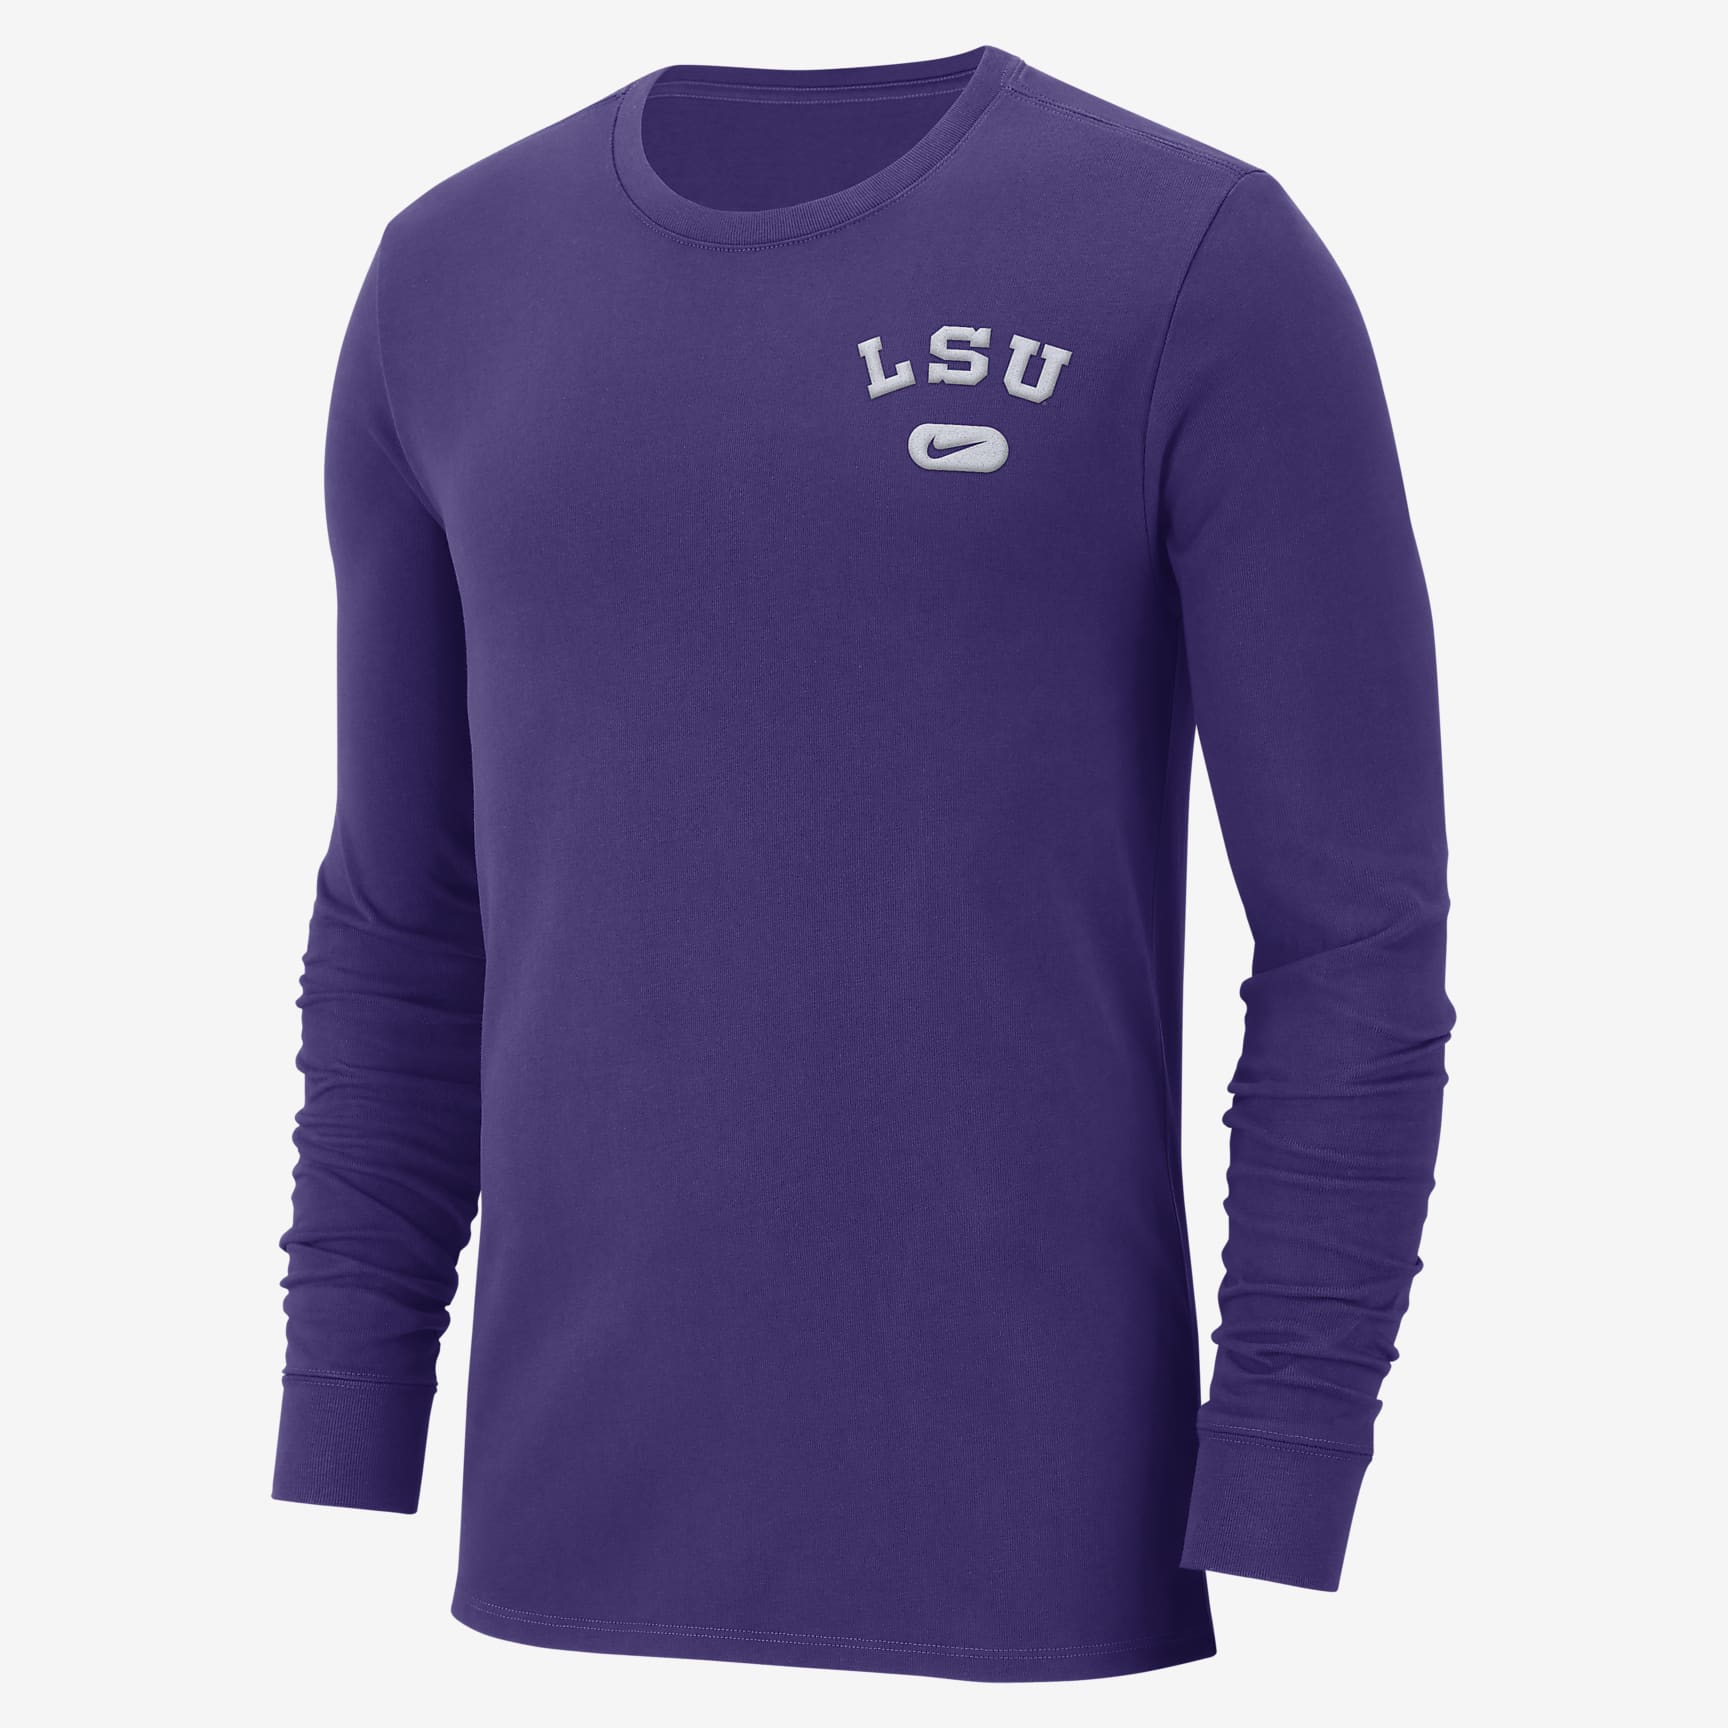 Nike College Elevated Essentials (LSU) Men's Long Sleeve Top . Nike.com